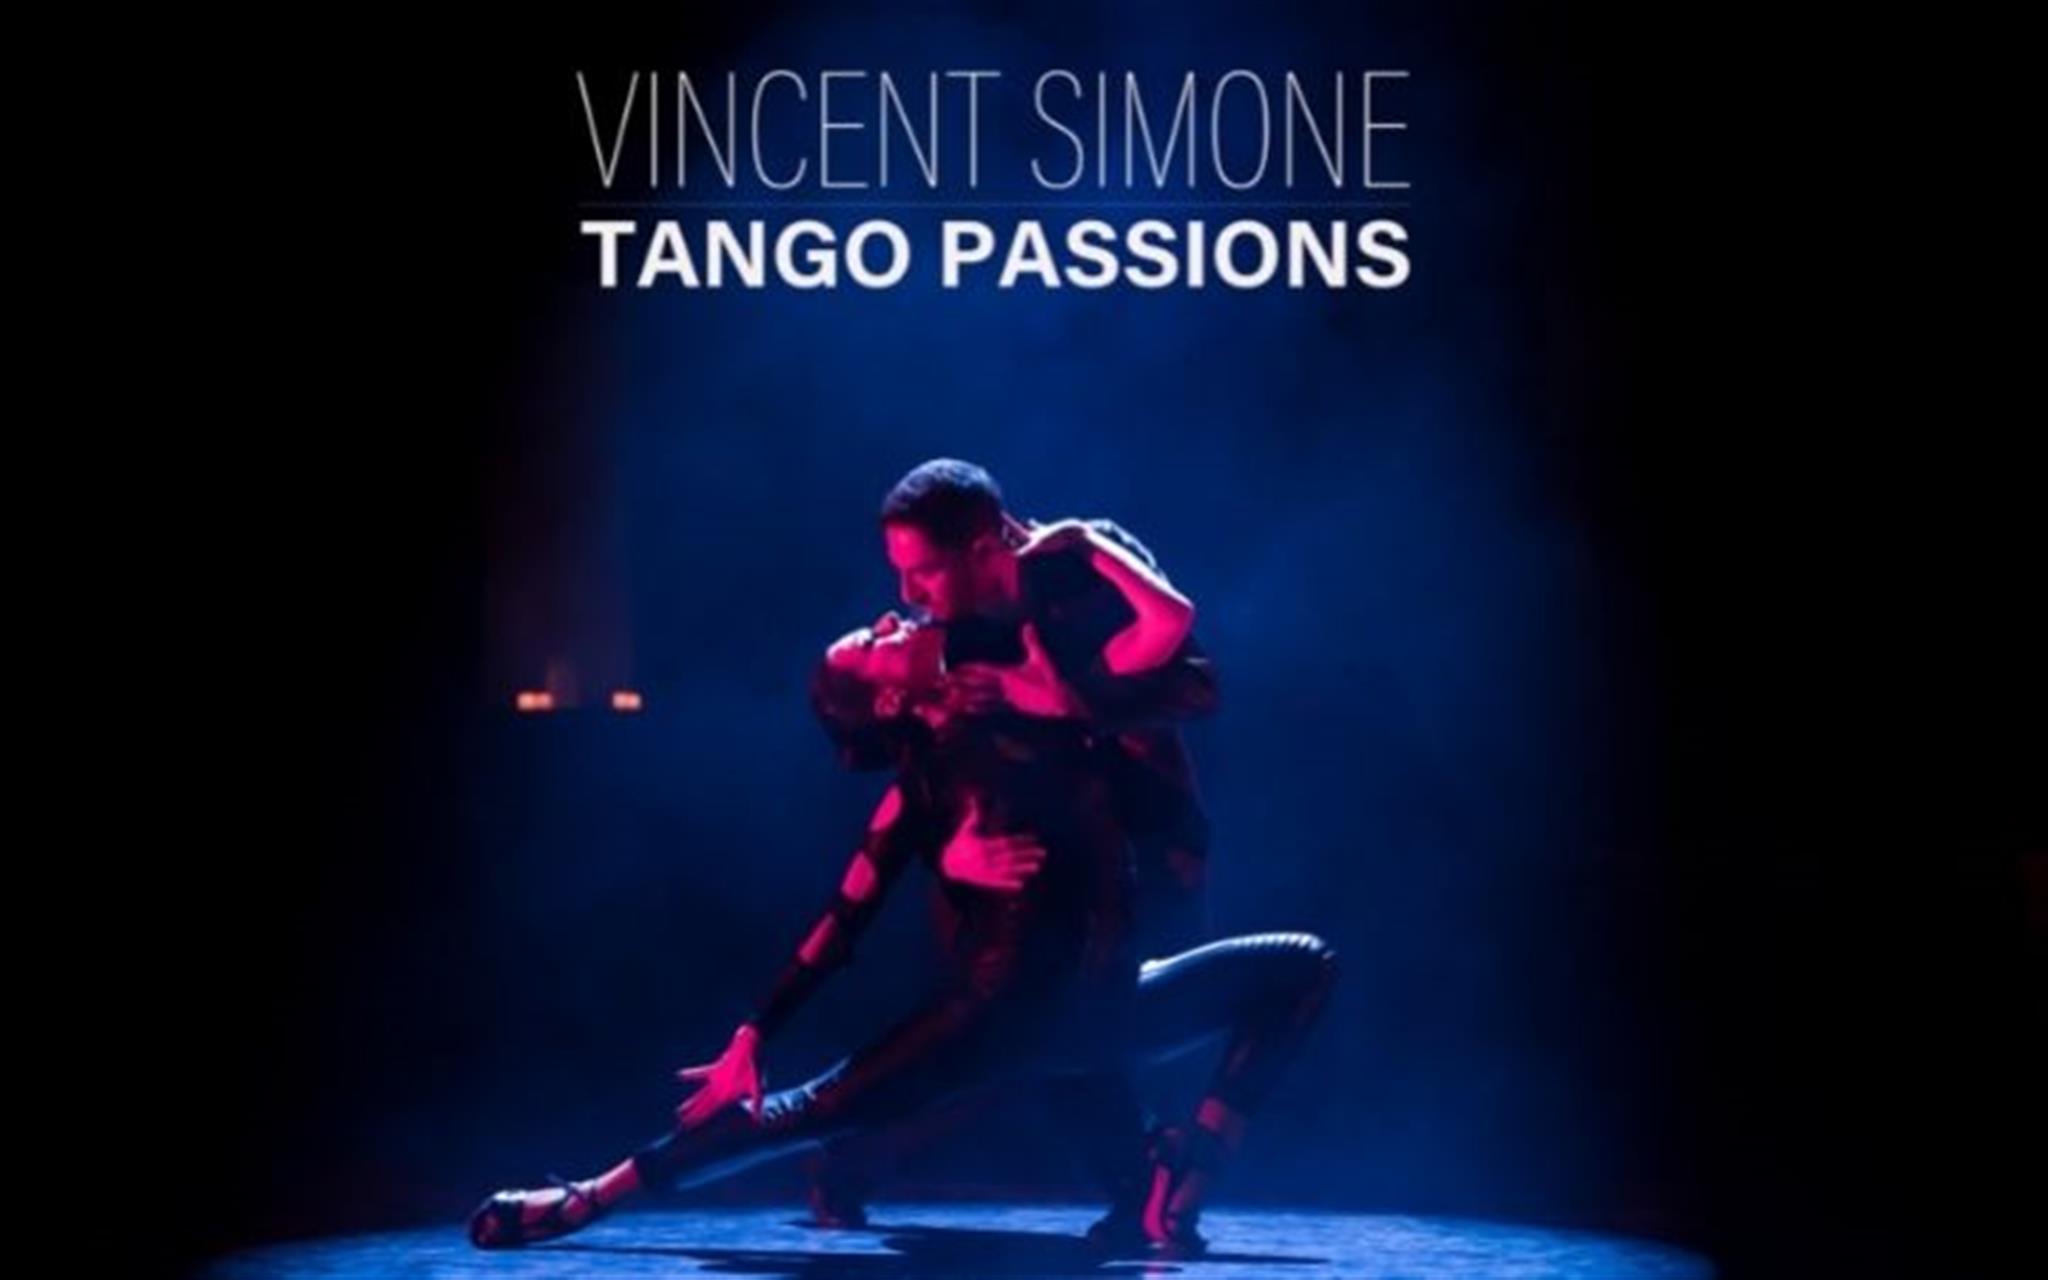 Vincent Simone - Tango Passions